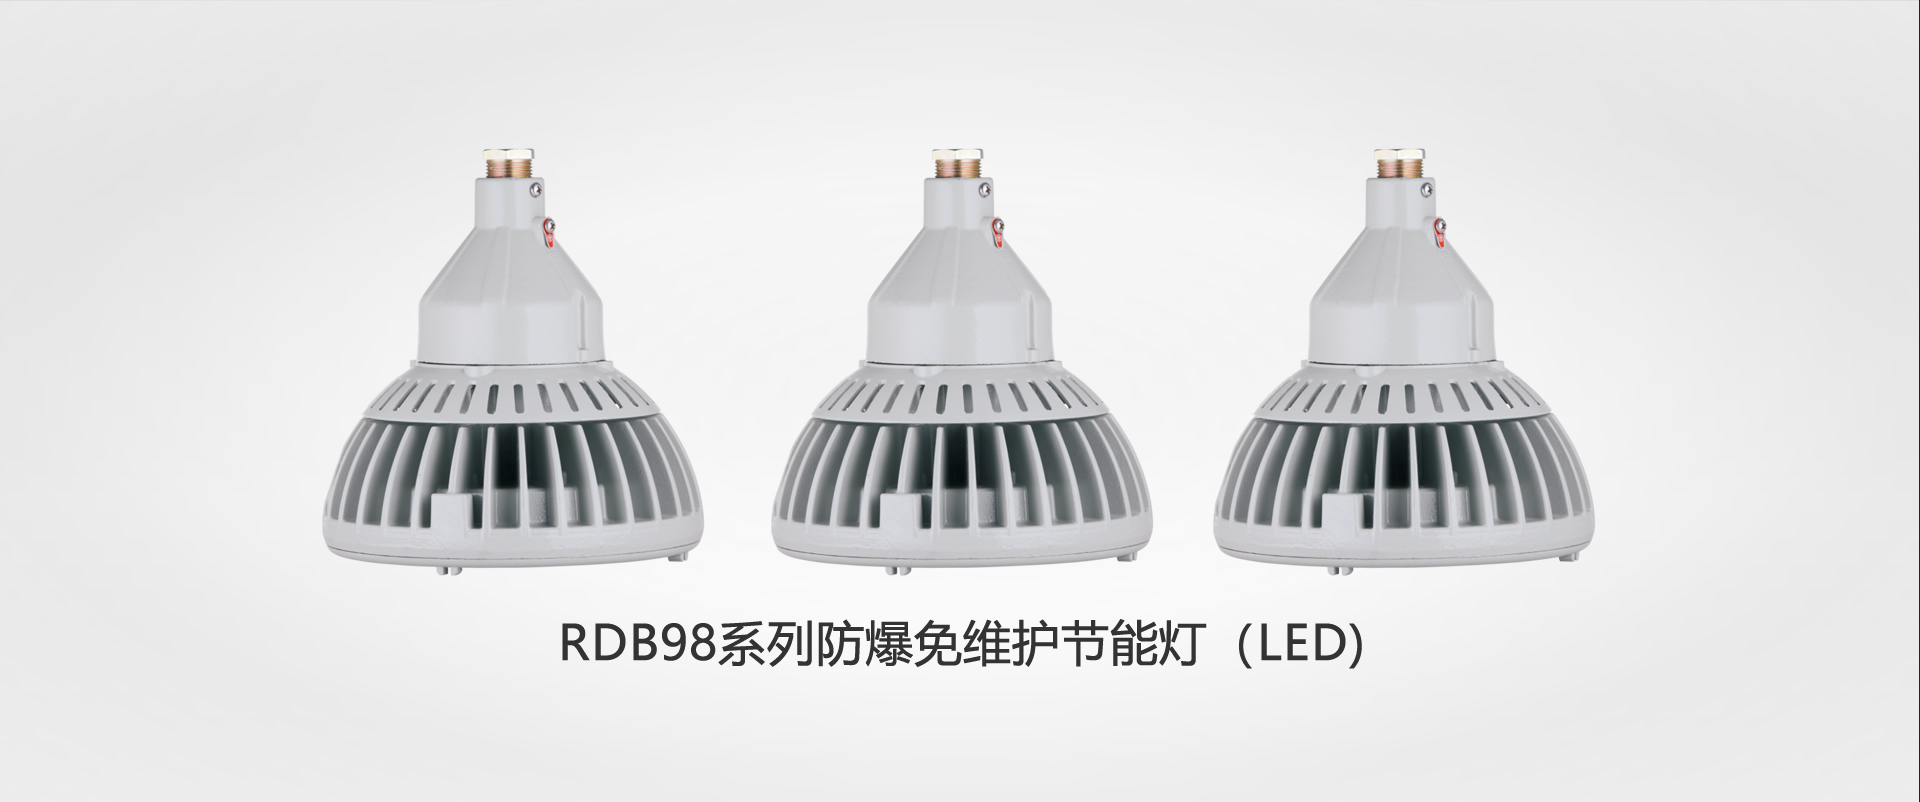 RDB98系(xi)列防爆免維護節能燈（LED)